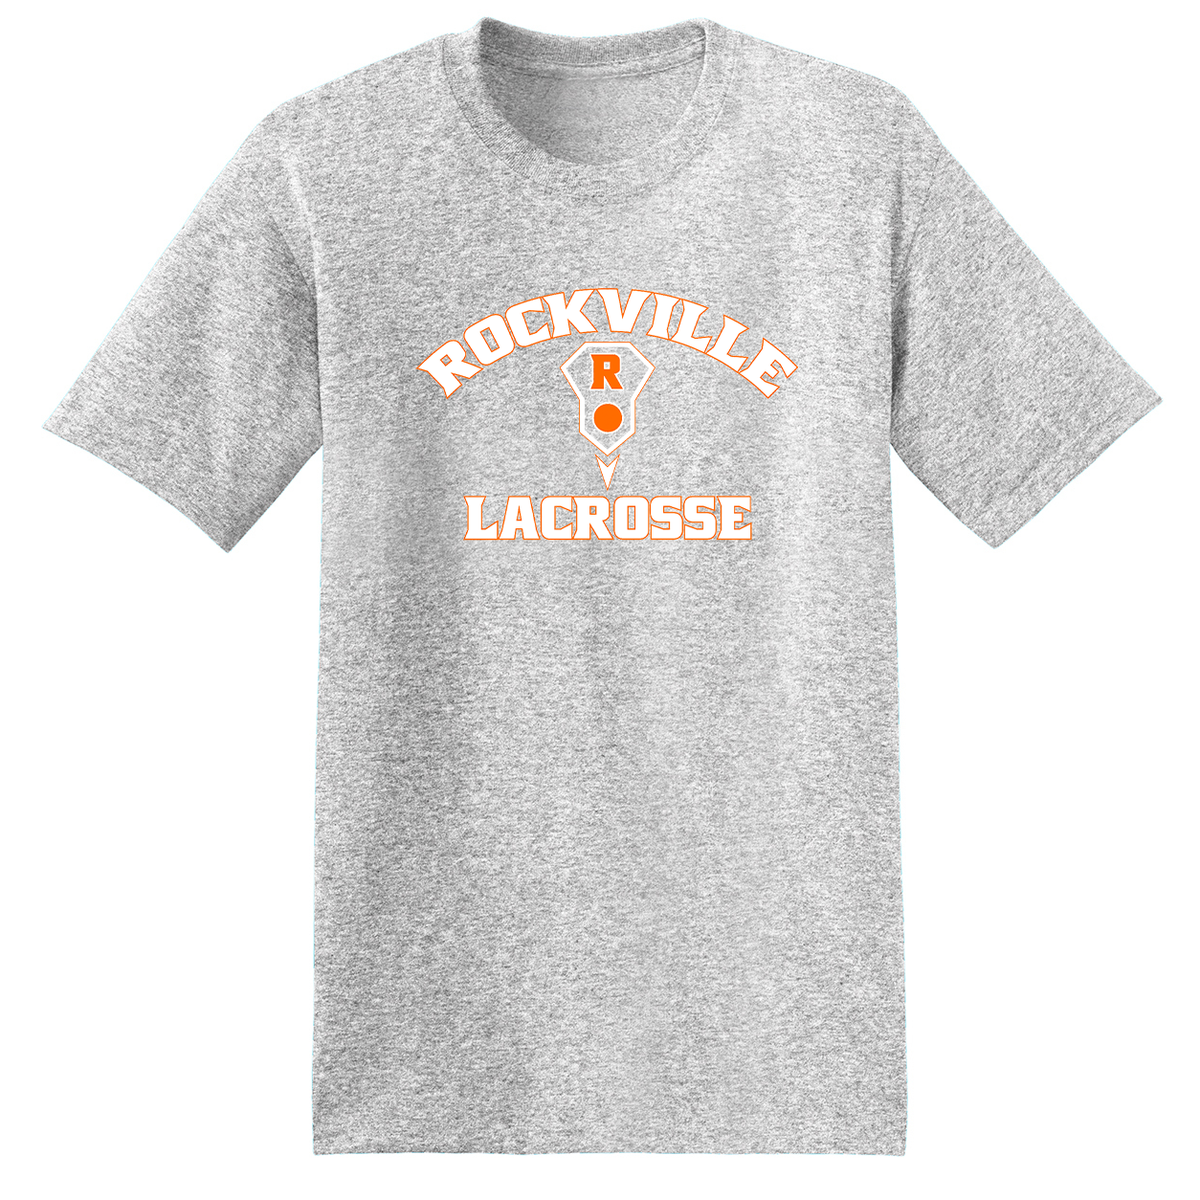 Rockville HS Girls Lacrosse T-Shirt